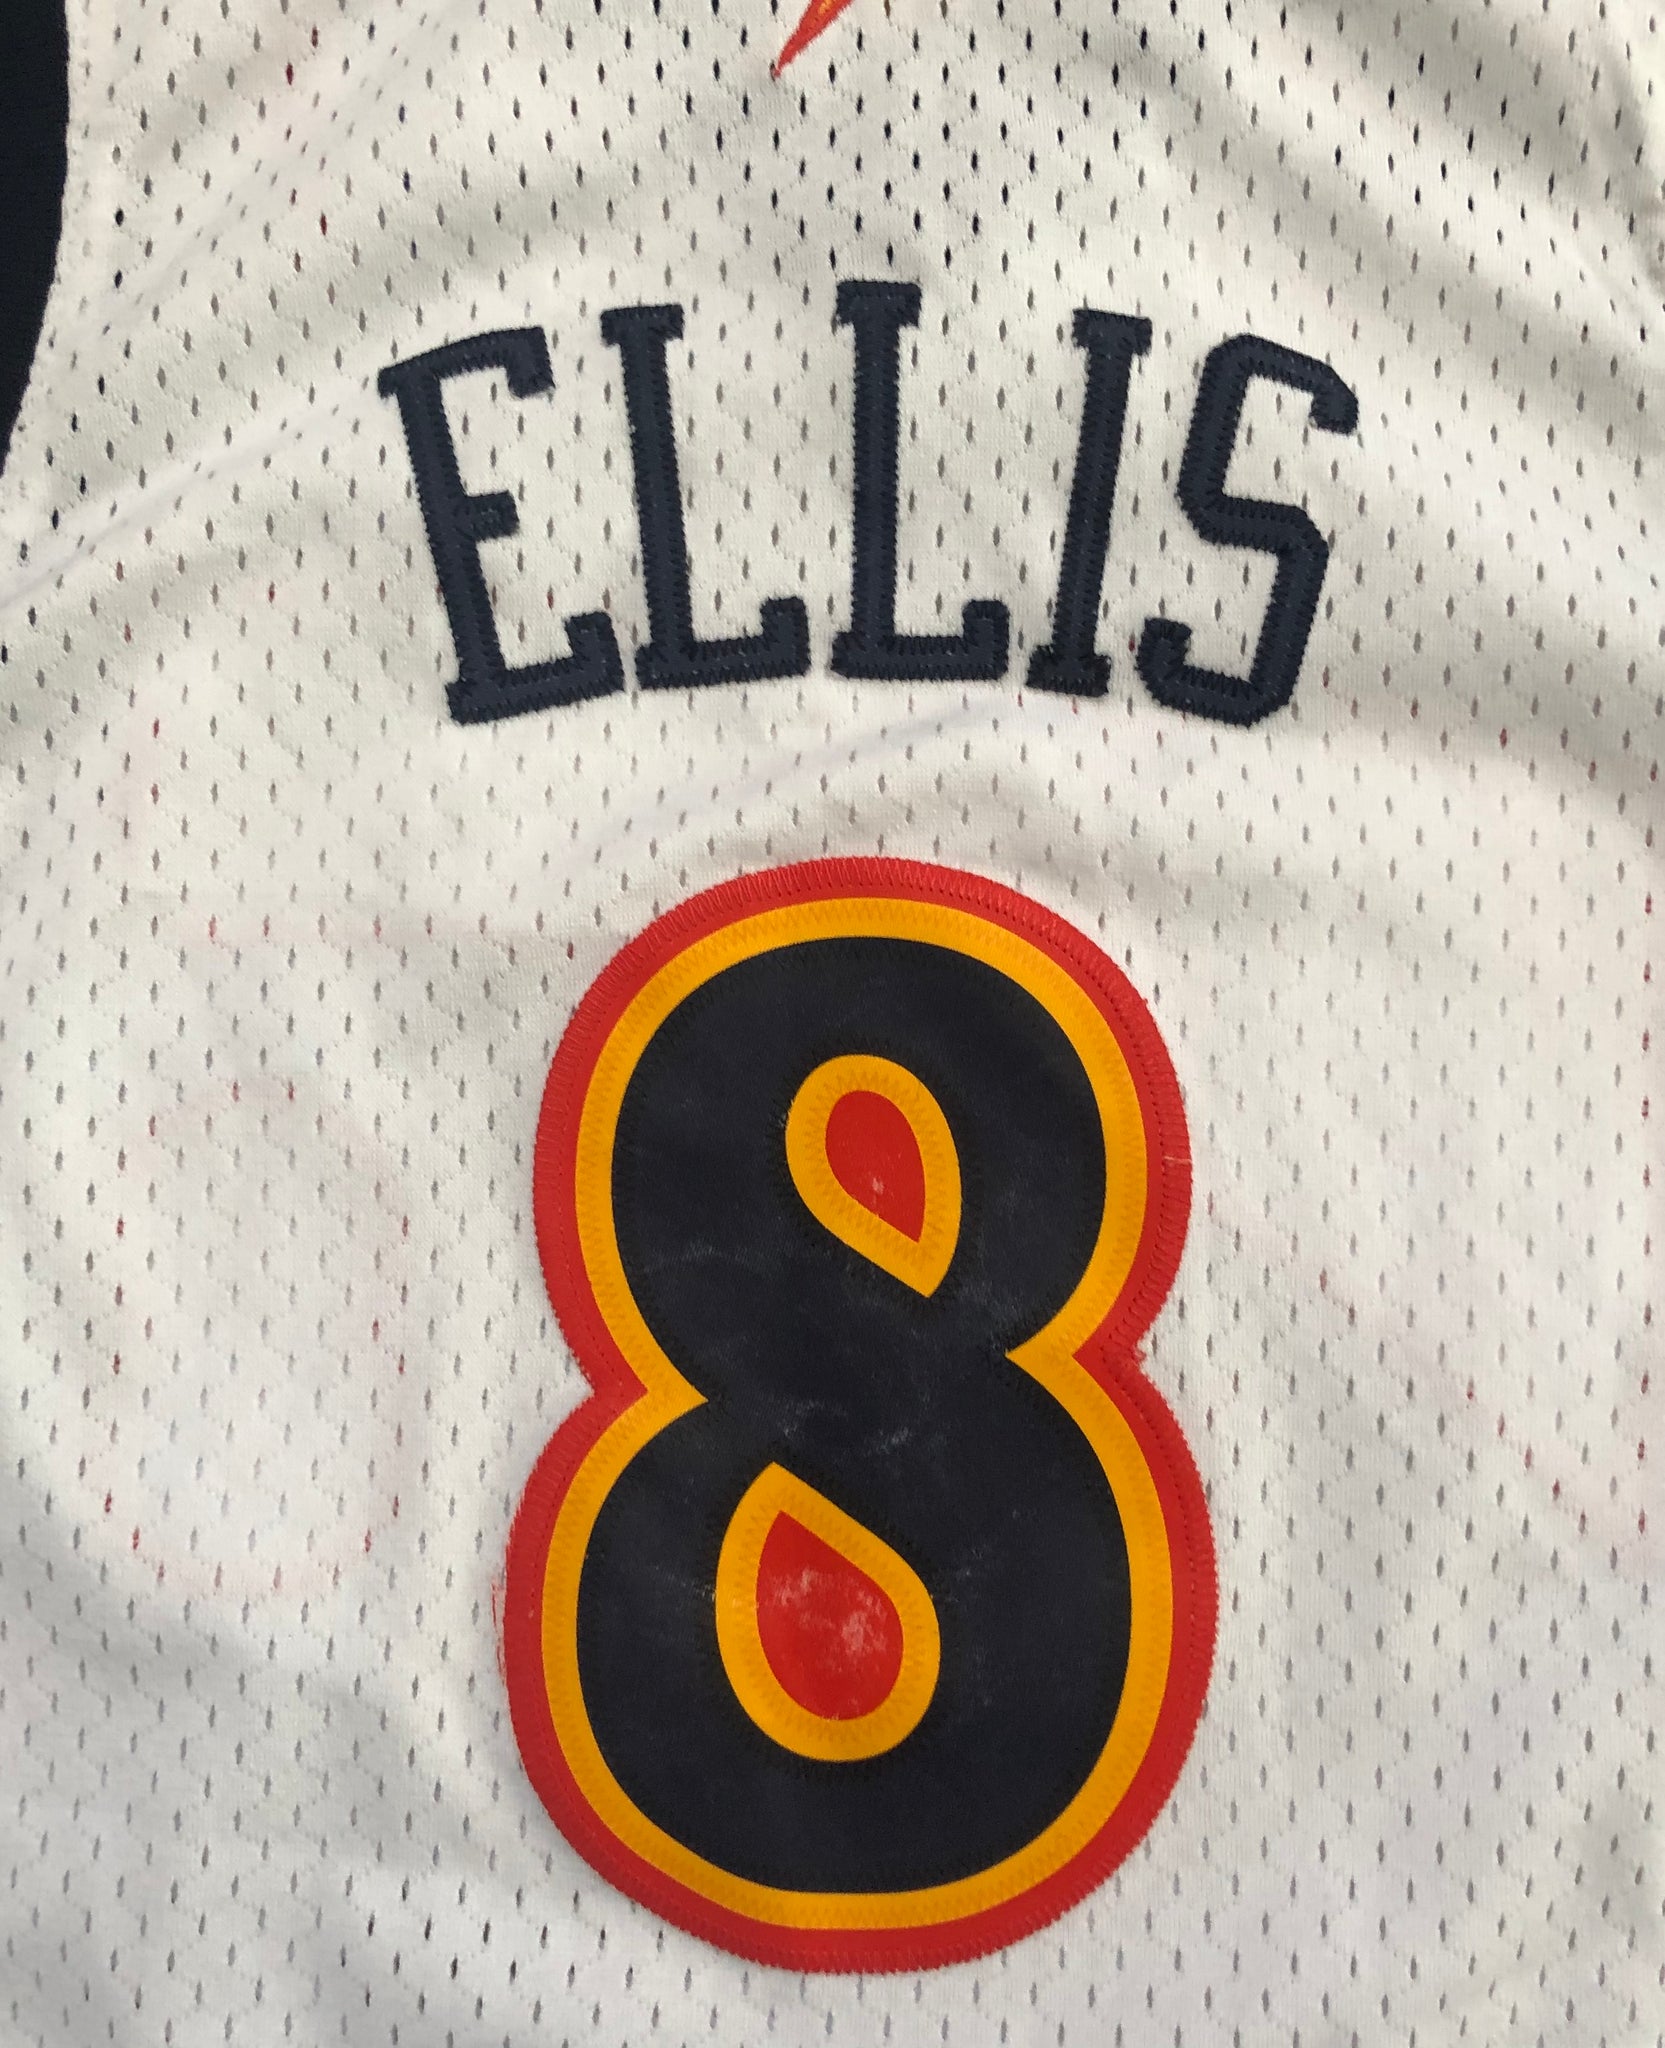 Golden State Warriors Monta Ellis #8 Swingman Adidas NBA Basketball Jersey  XXL